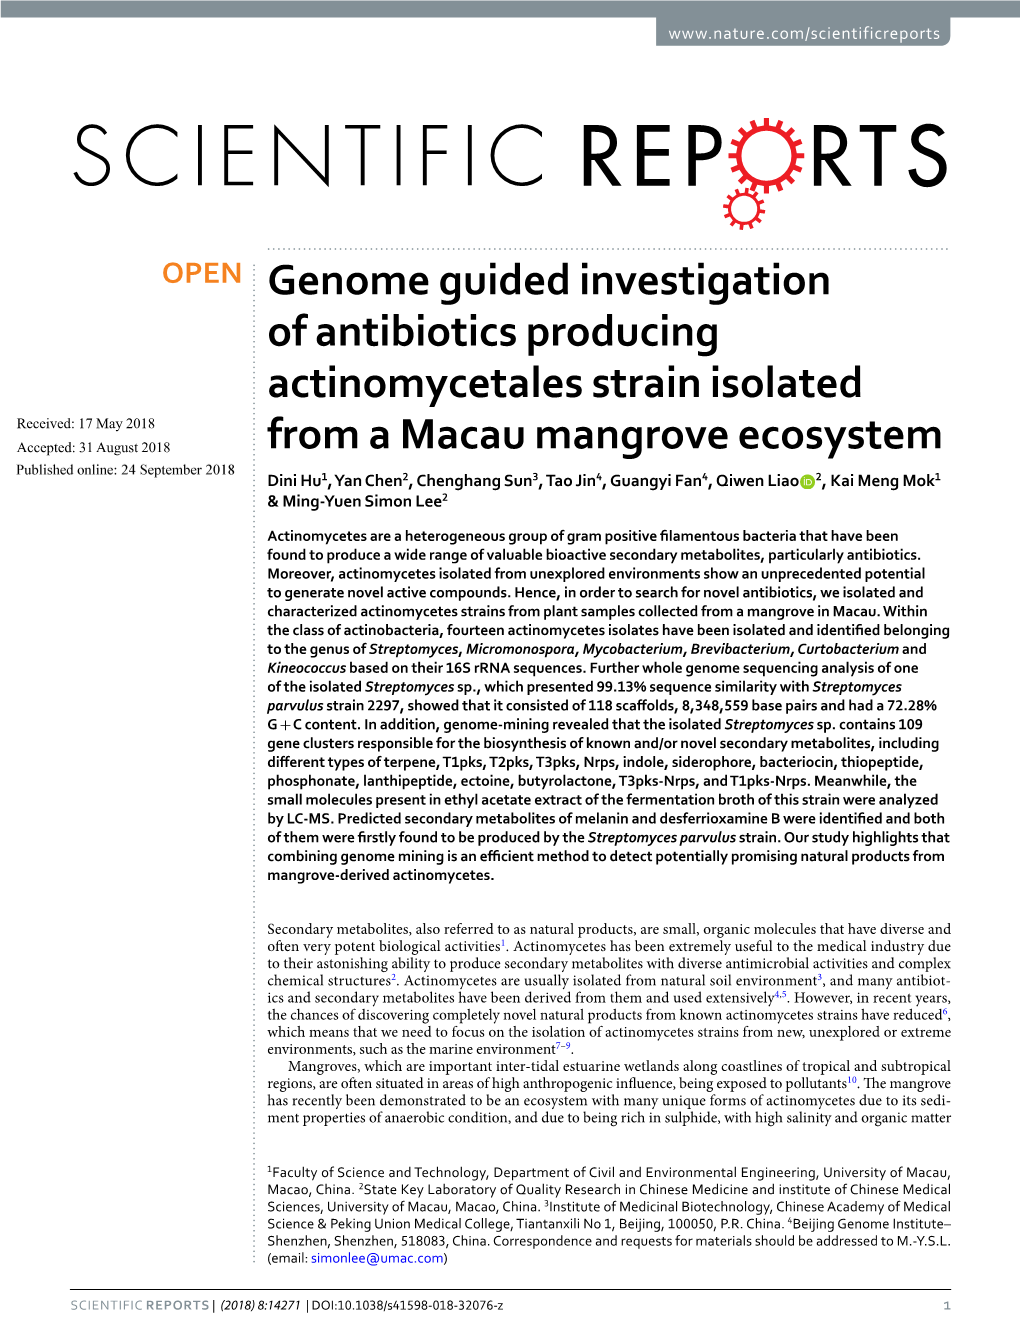 Genome Guided Investigation of Antibiotics Producing